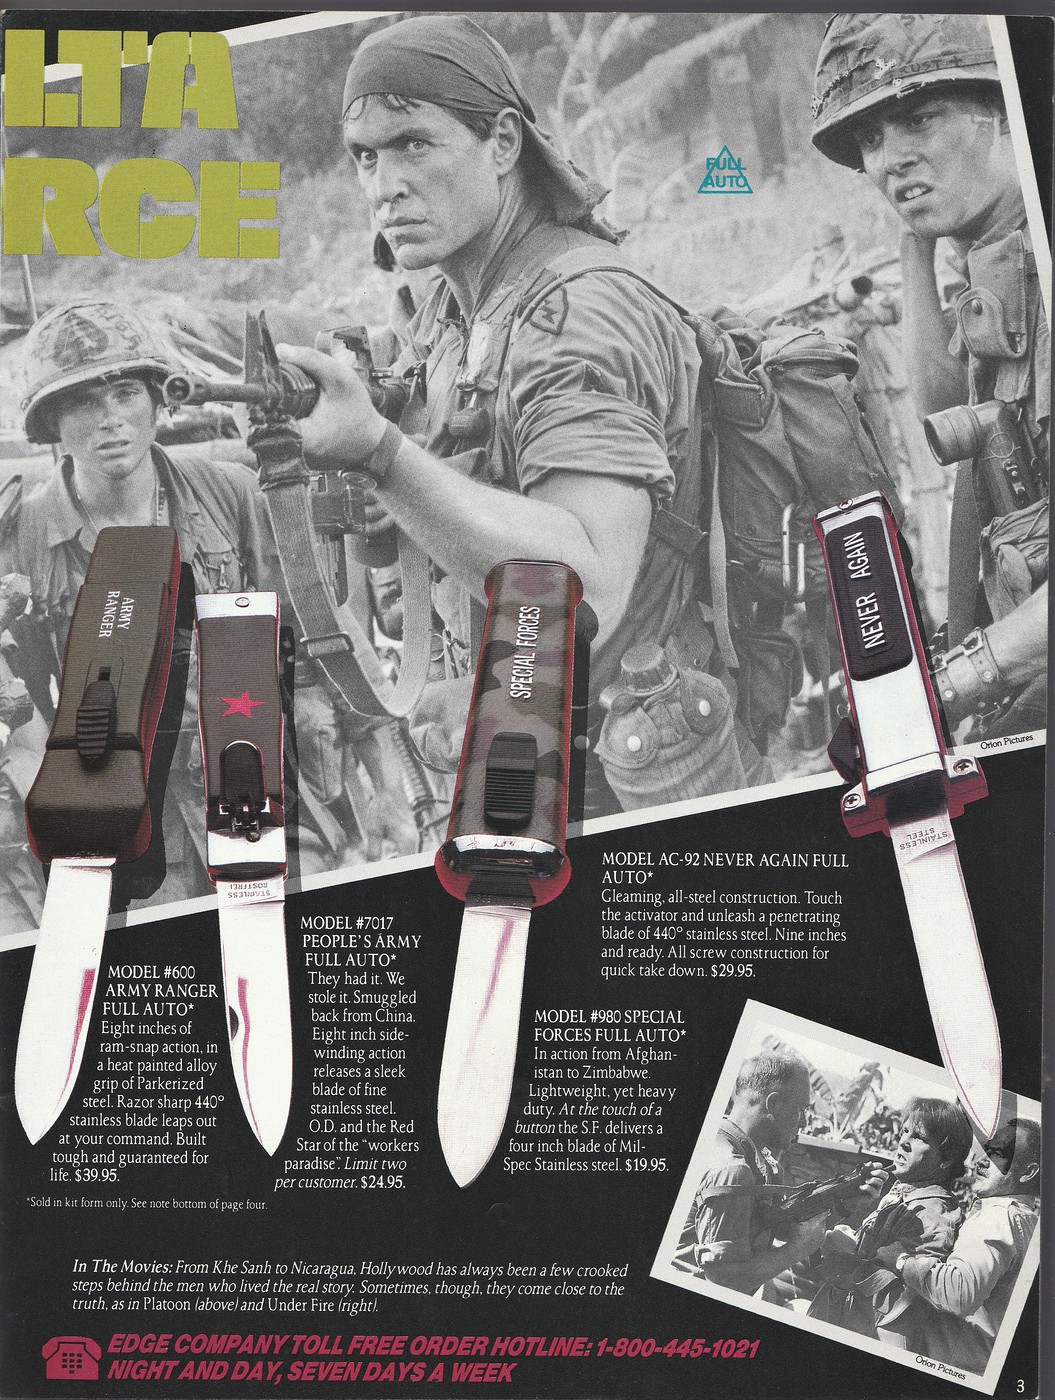 Edgeco knives - Copy.jpg